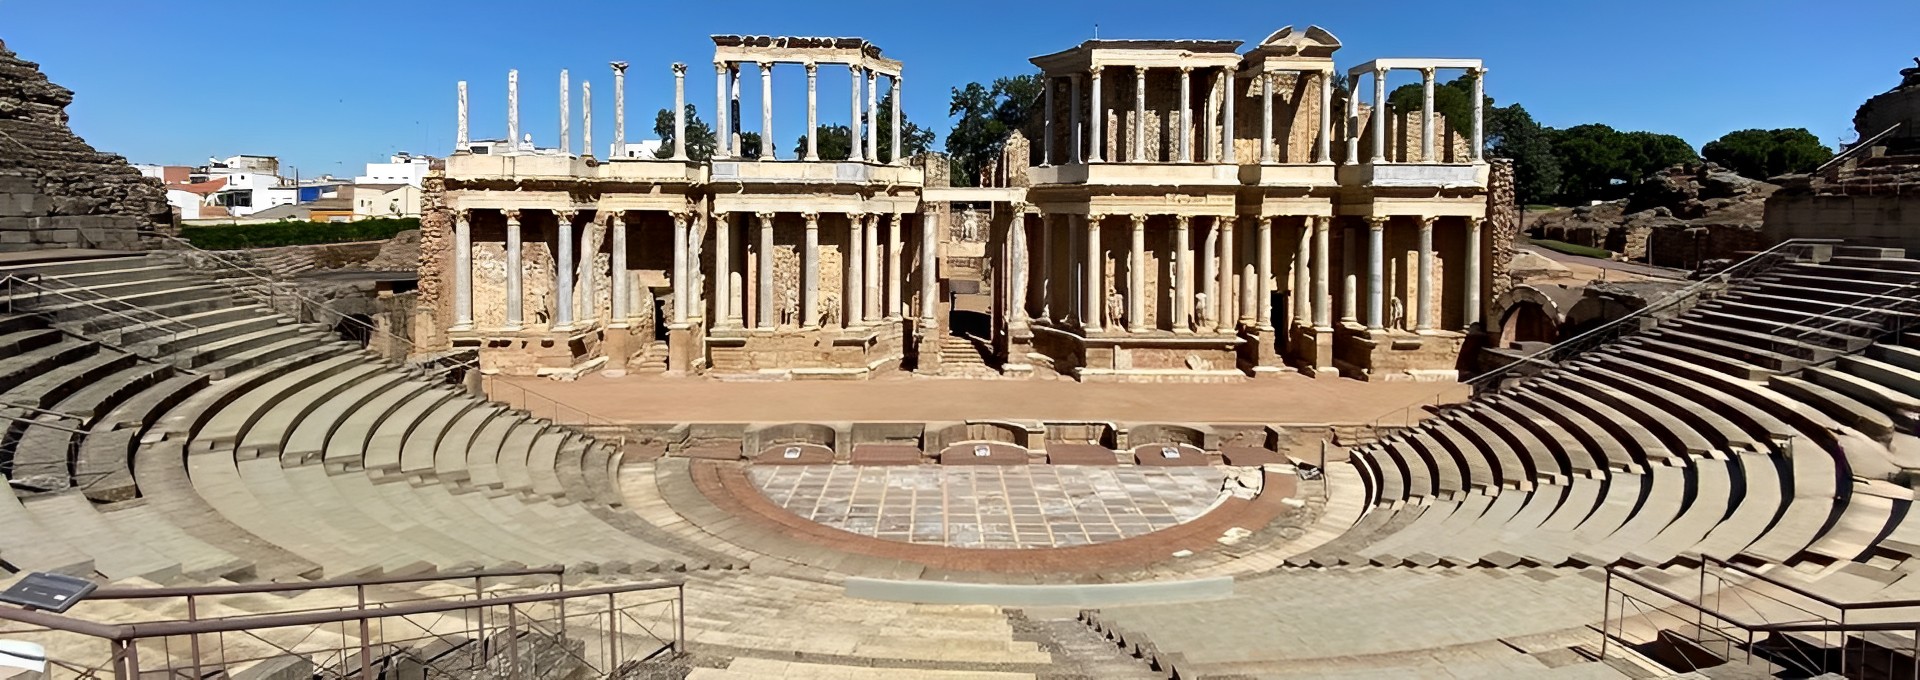 Teatro romano de Mérida panorámica